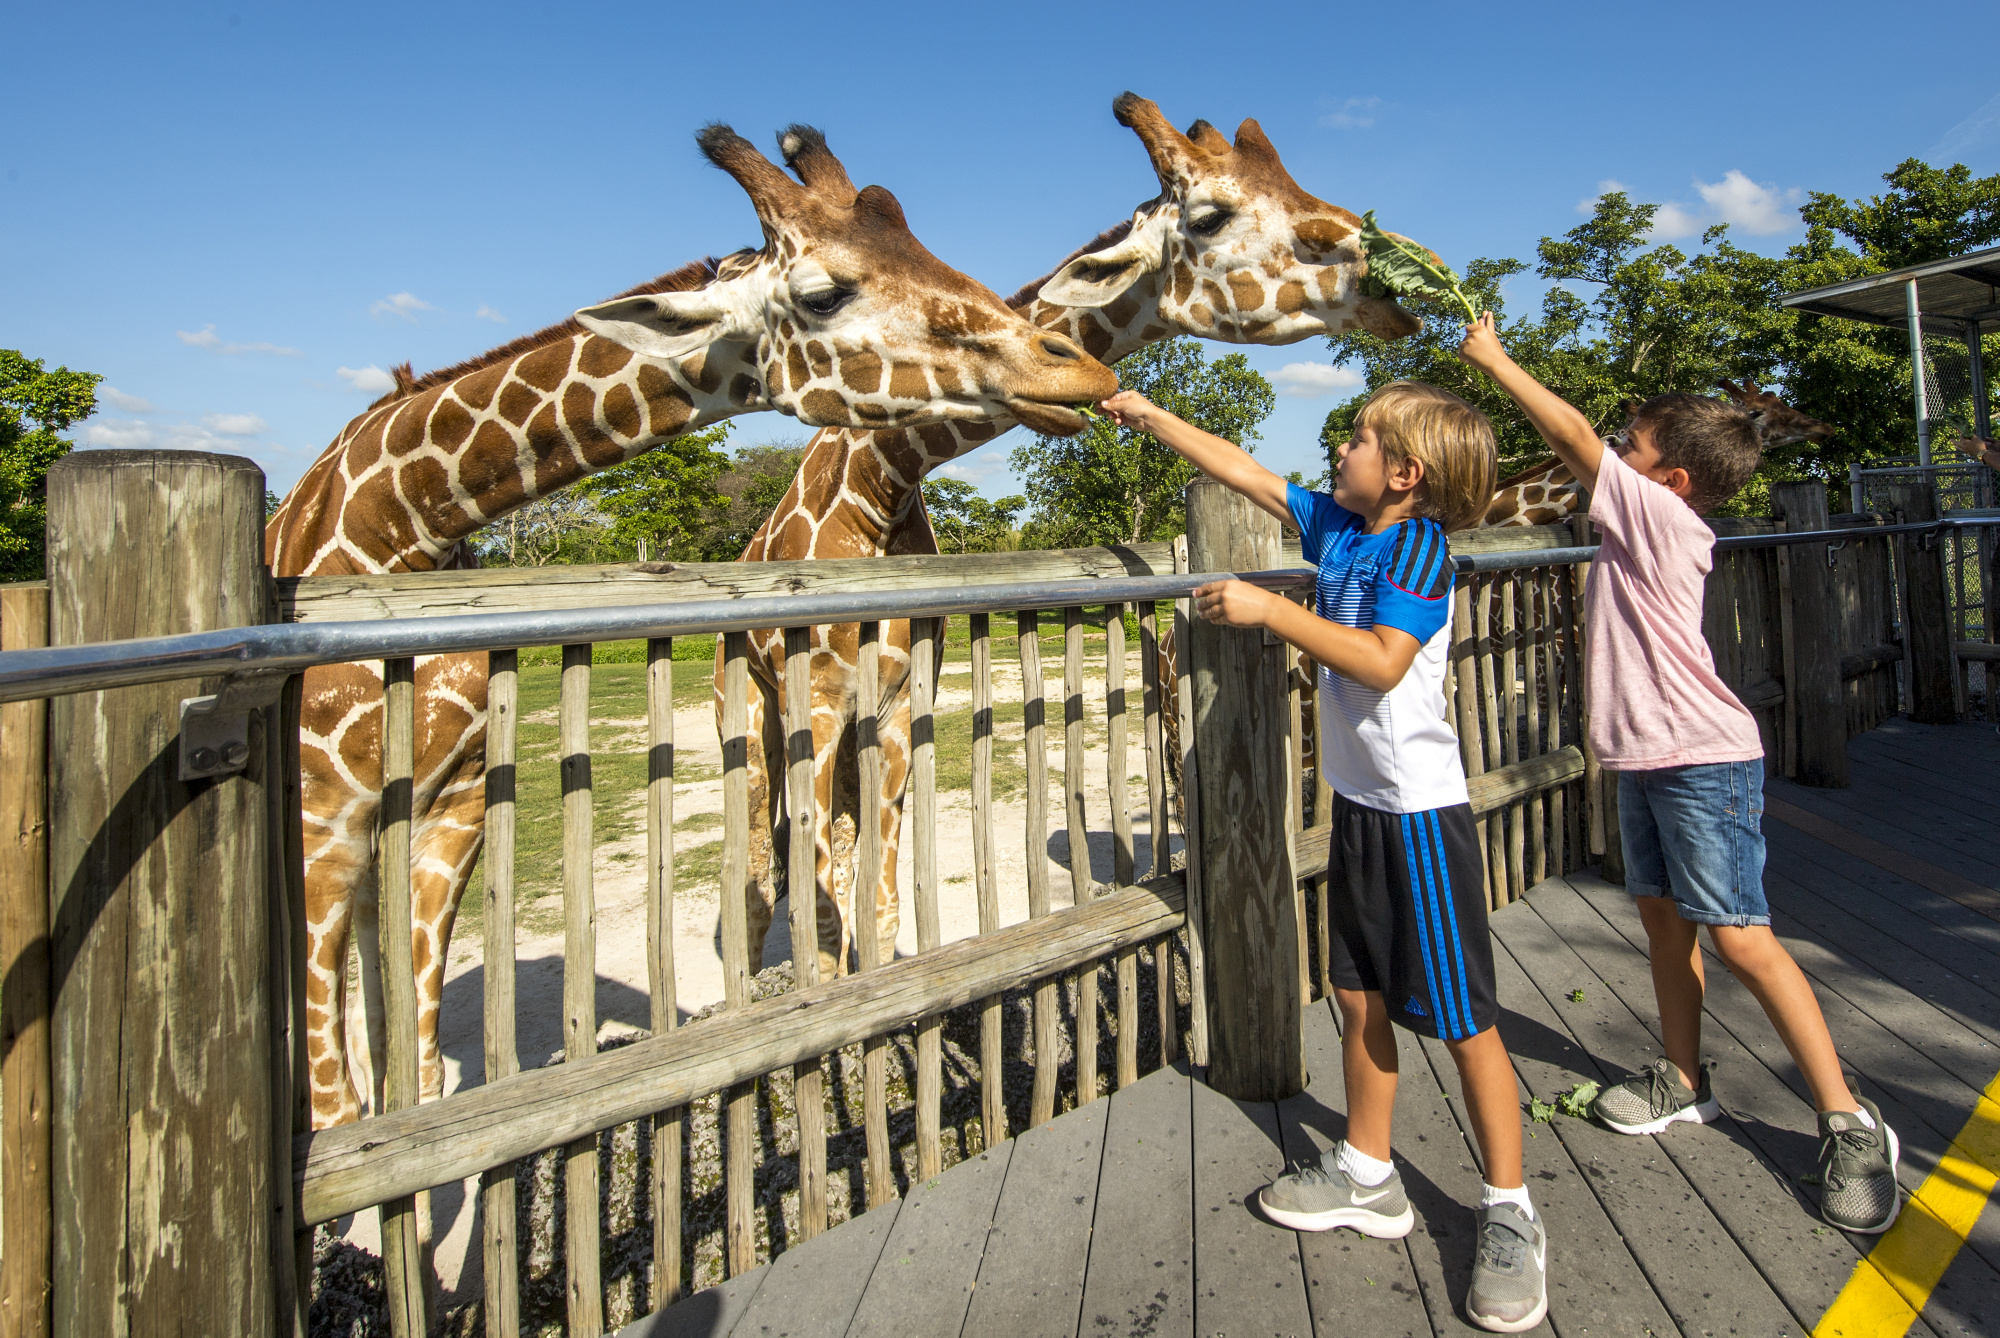 miami vacation guide, kids feeding giraffes at Zoo Miami, Florida